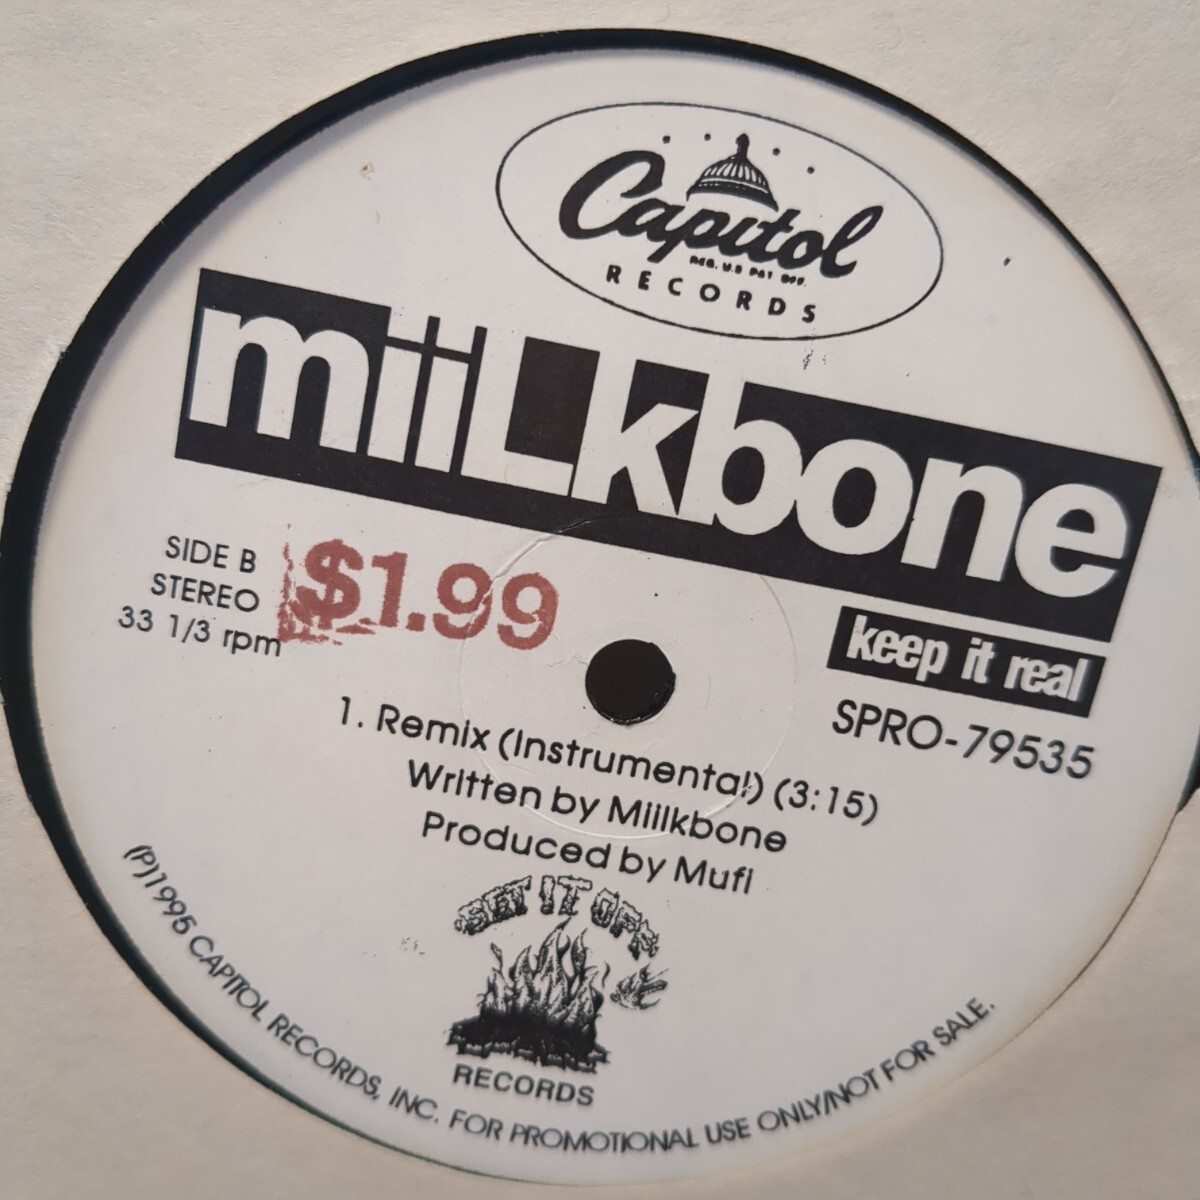 miilkbone/keep it real remix org promo.